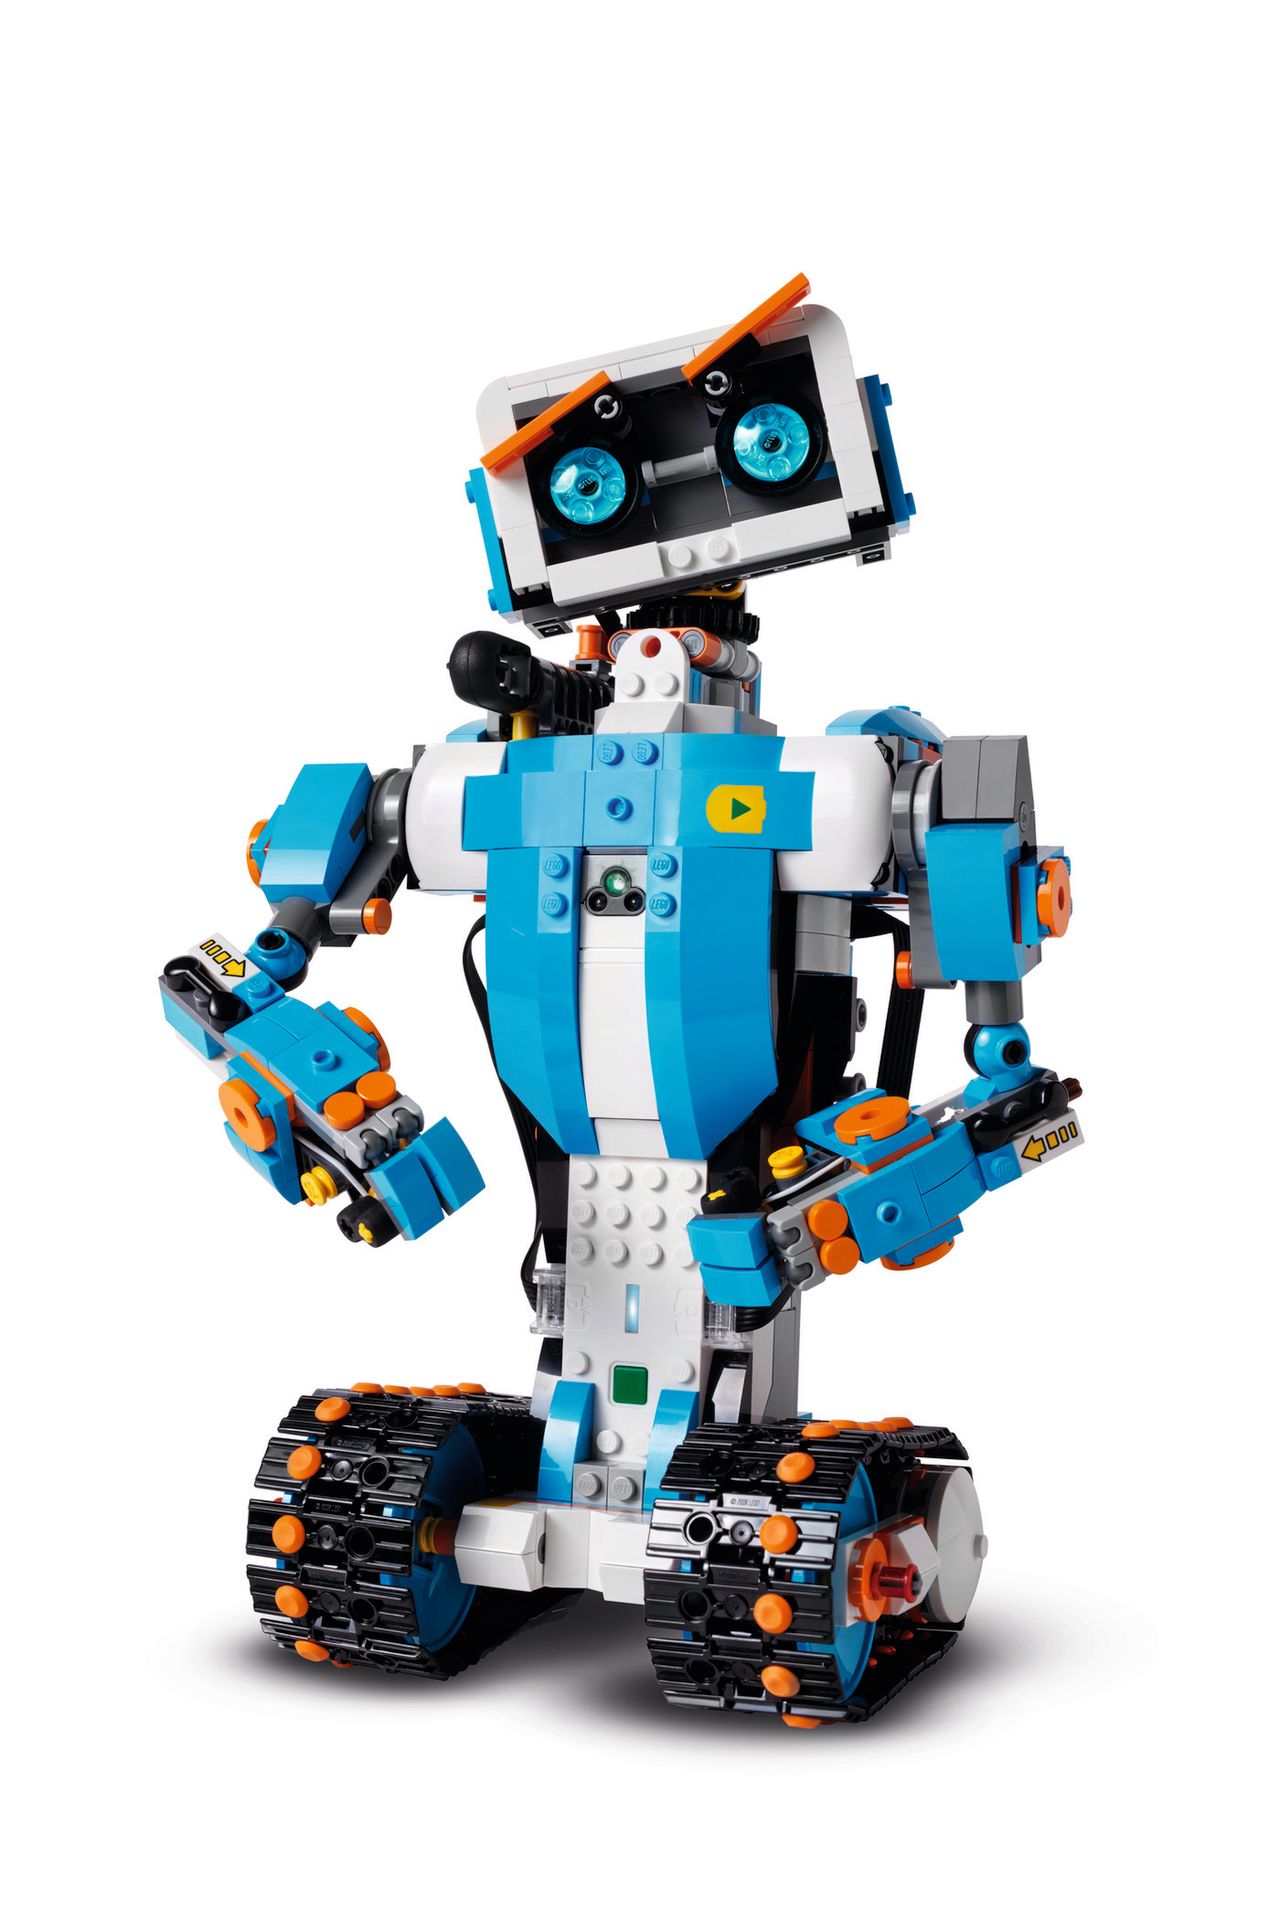 Recenzja Lego Boost Creative Toolbox